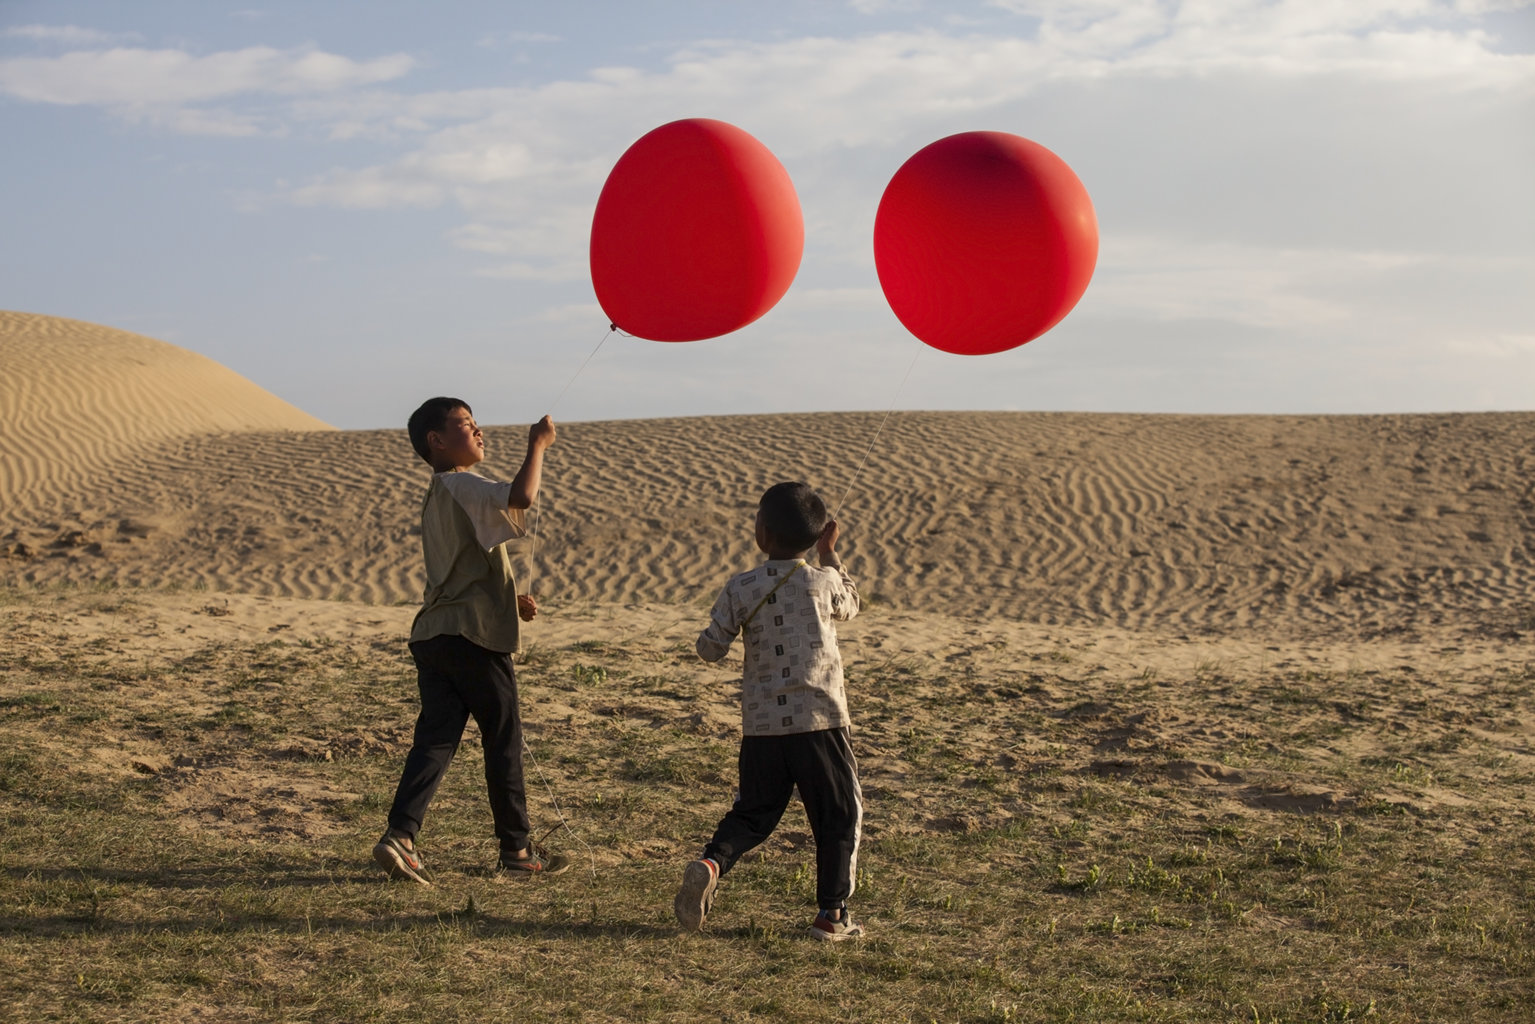 Balloon, Pema Tseden (China, 2019)